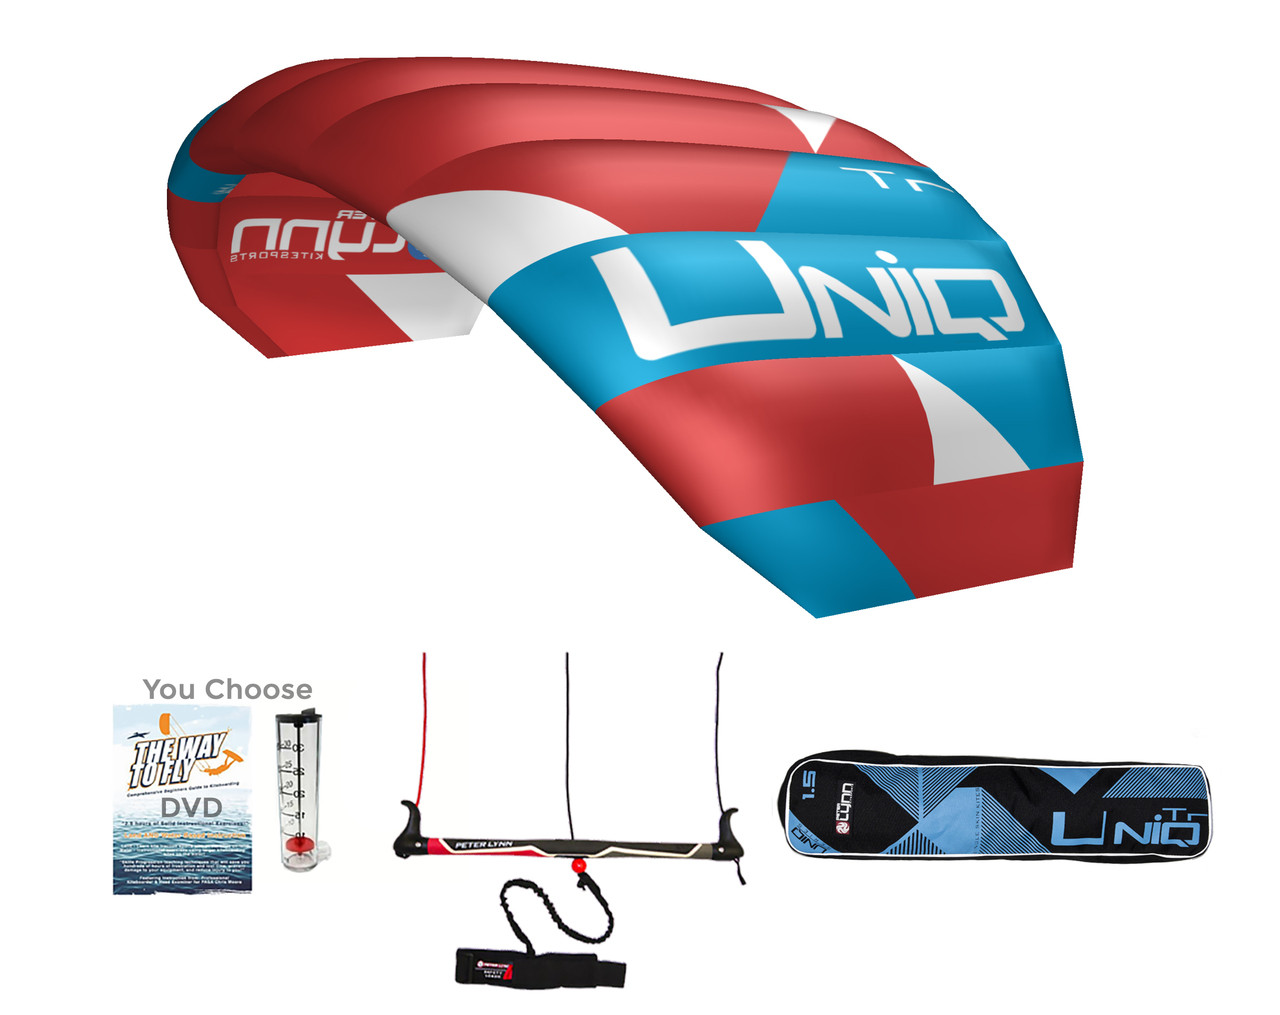 Trainer Kite for Kitesurfing 2.5m High Quality Red Kite FreeShip+Tracking